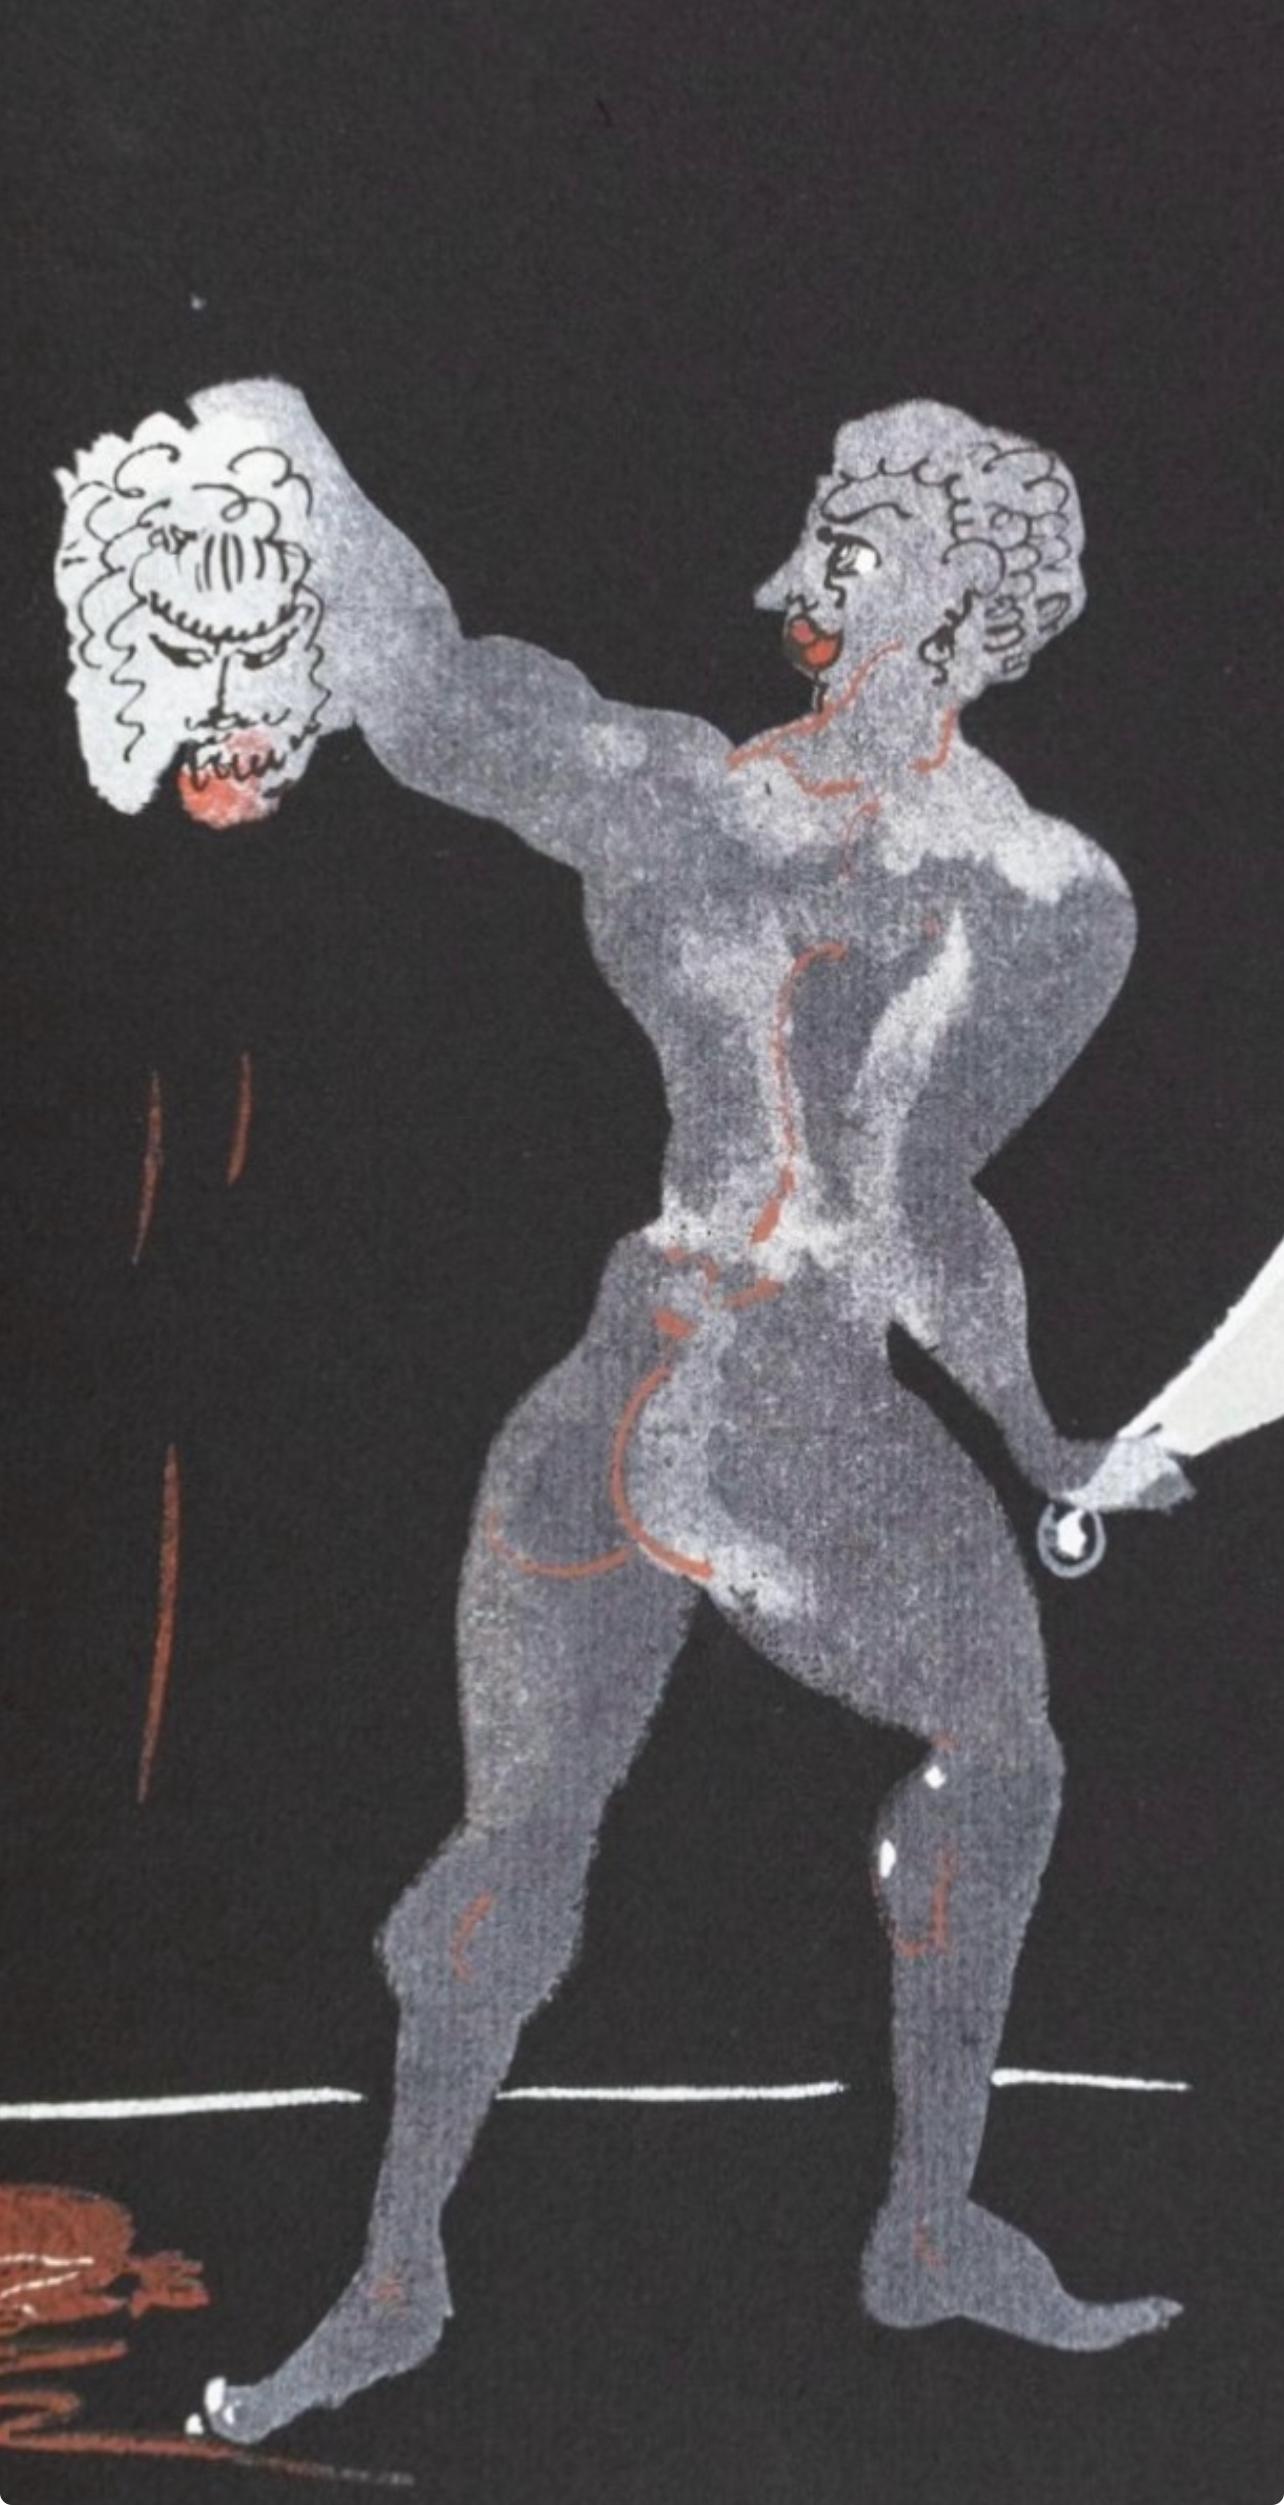 Derain, Composition, Salomé, The Limited Editions Club (after) - Print by André Derain